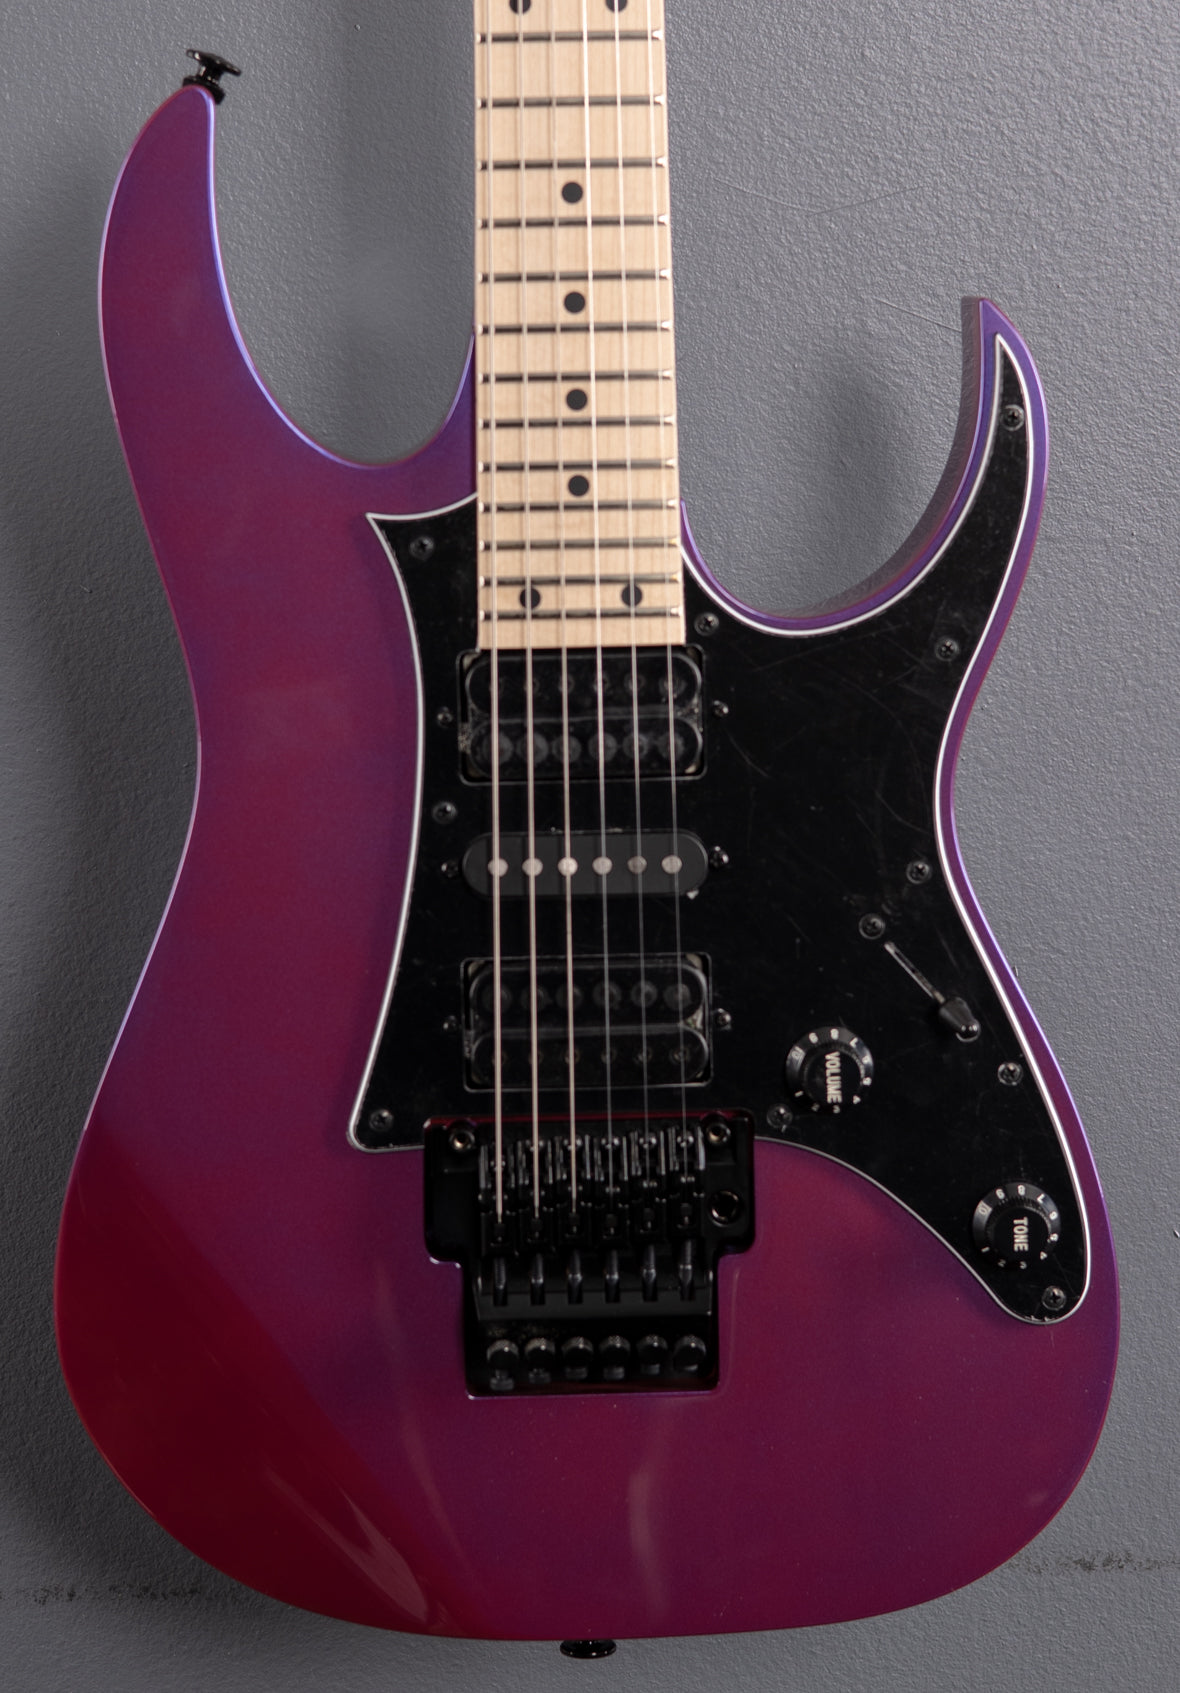 Genesis Collection RG550 - Purple Neon